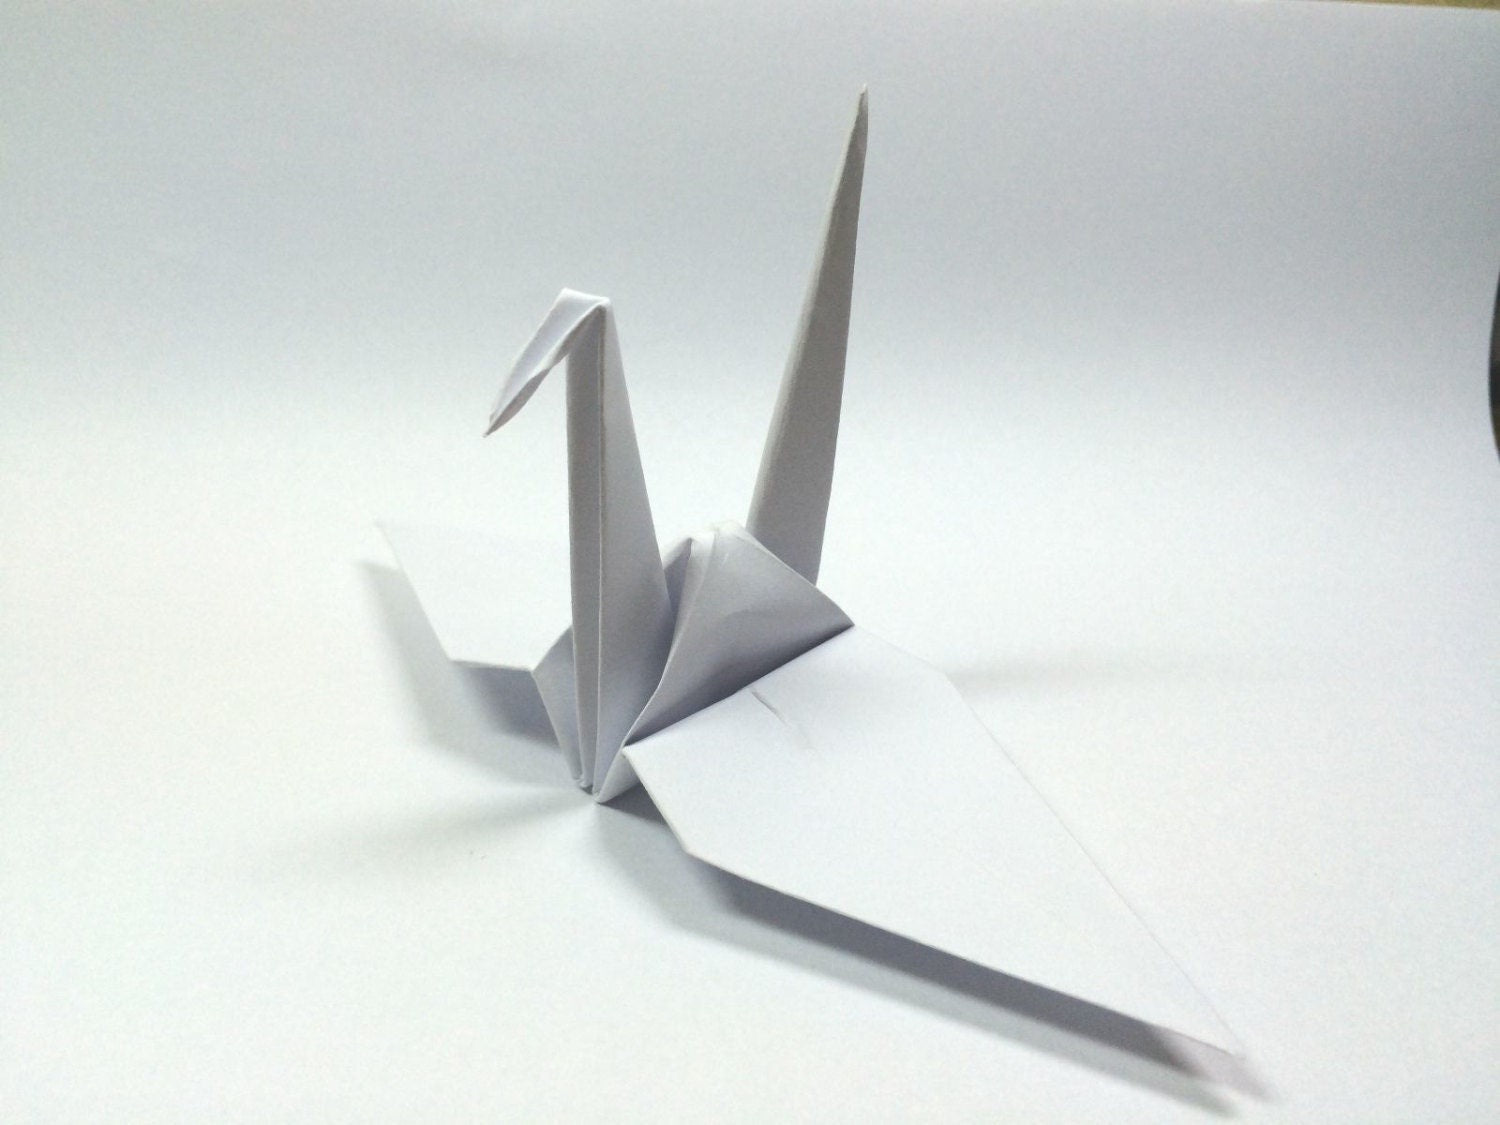 100 White Origami Cranes Large 6 inches Bird Origami Crane 15cm for Japanese Wedding Gift